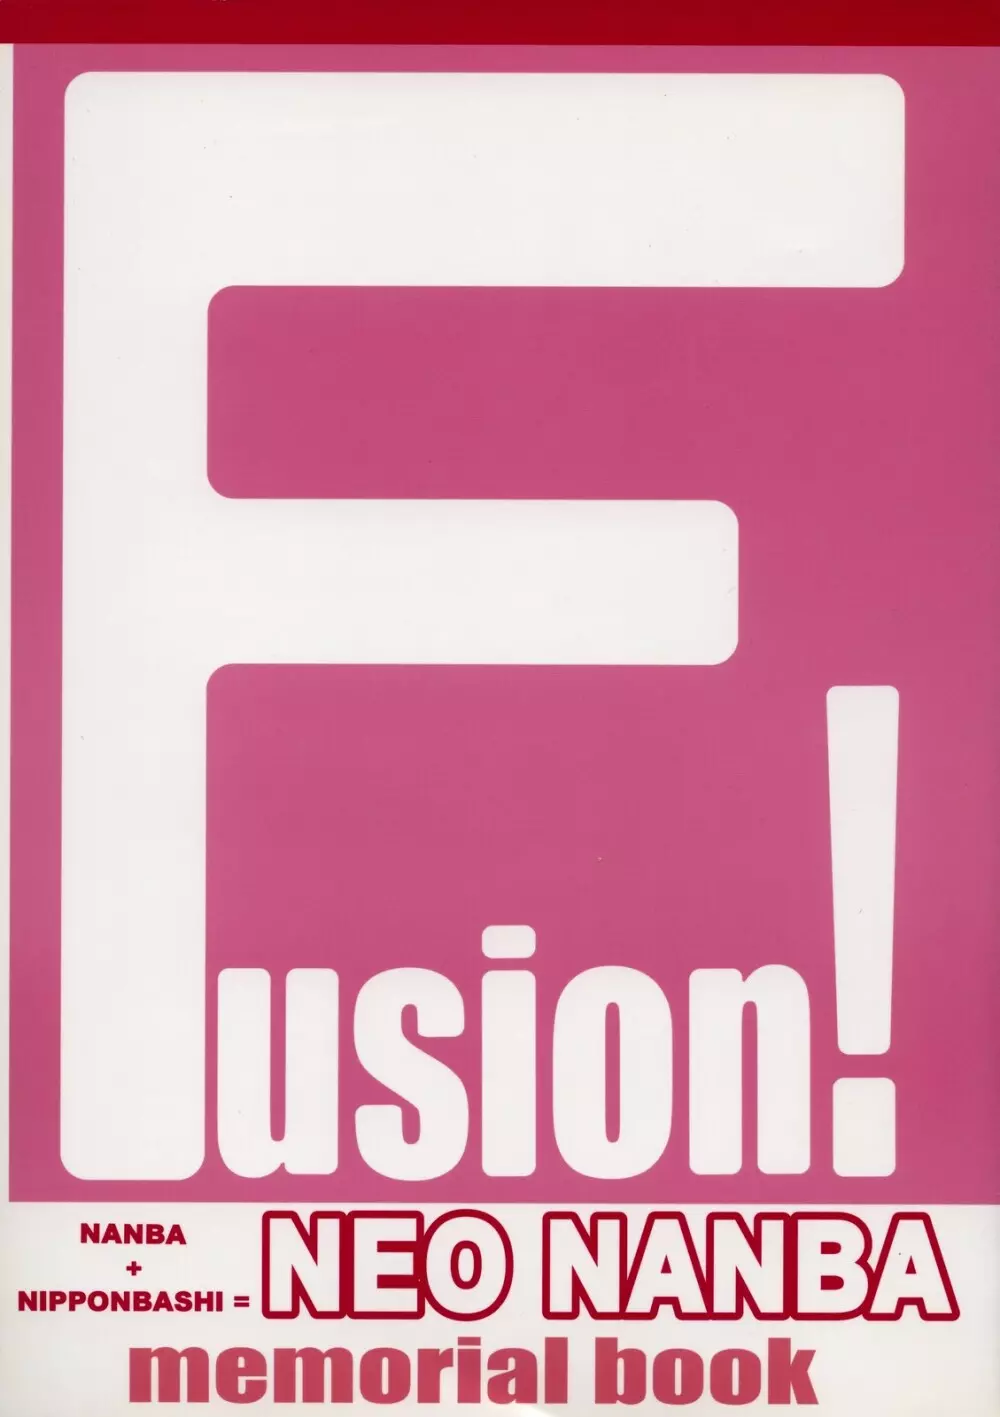 Fusion! NEO NANBA memorial book - page1